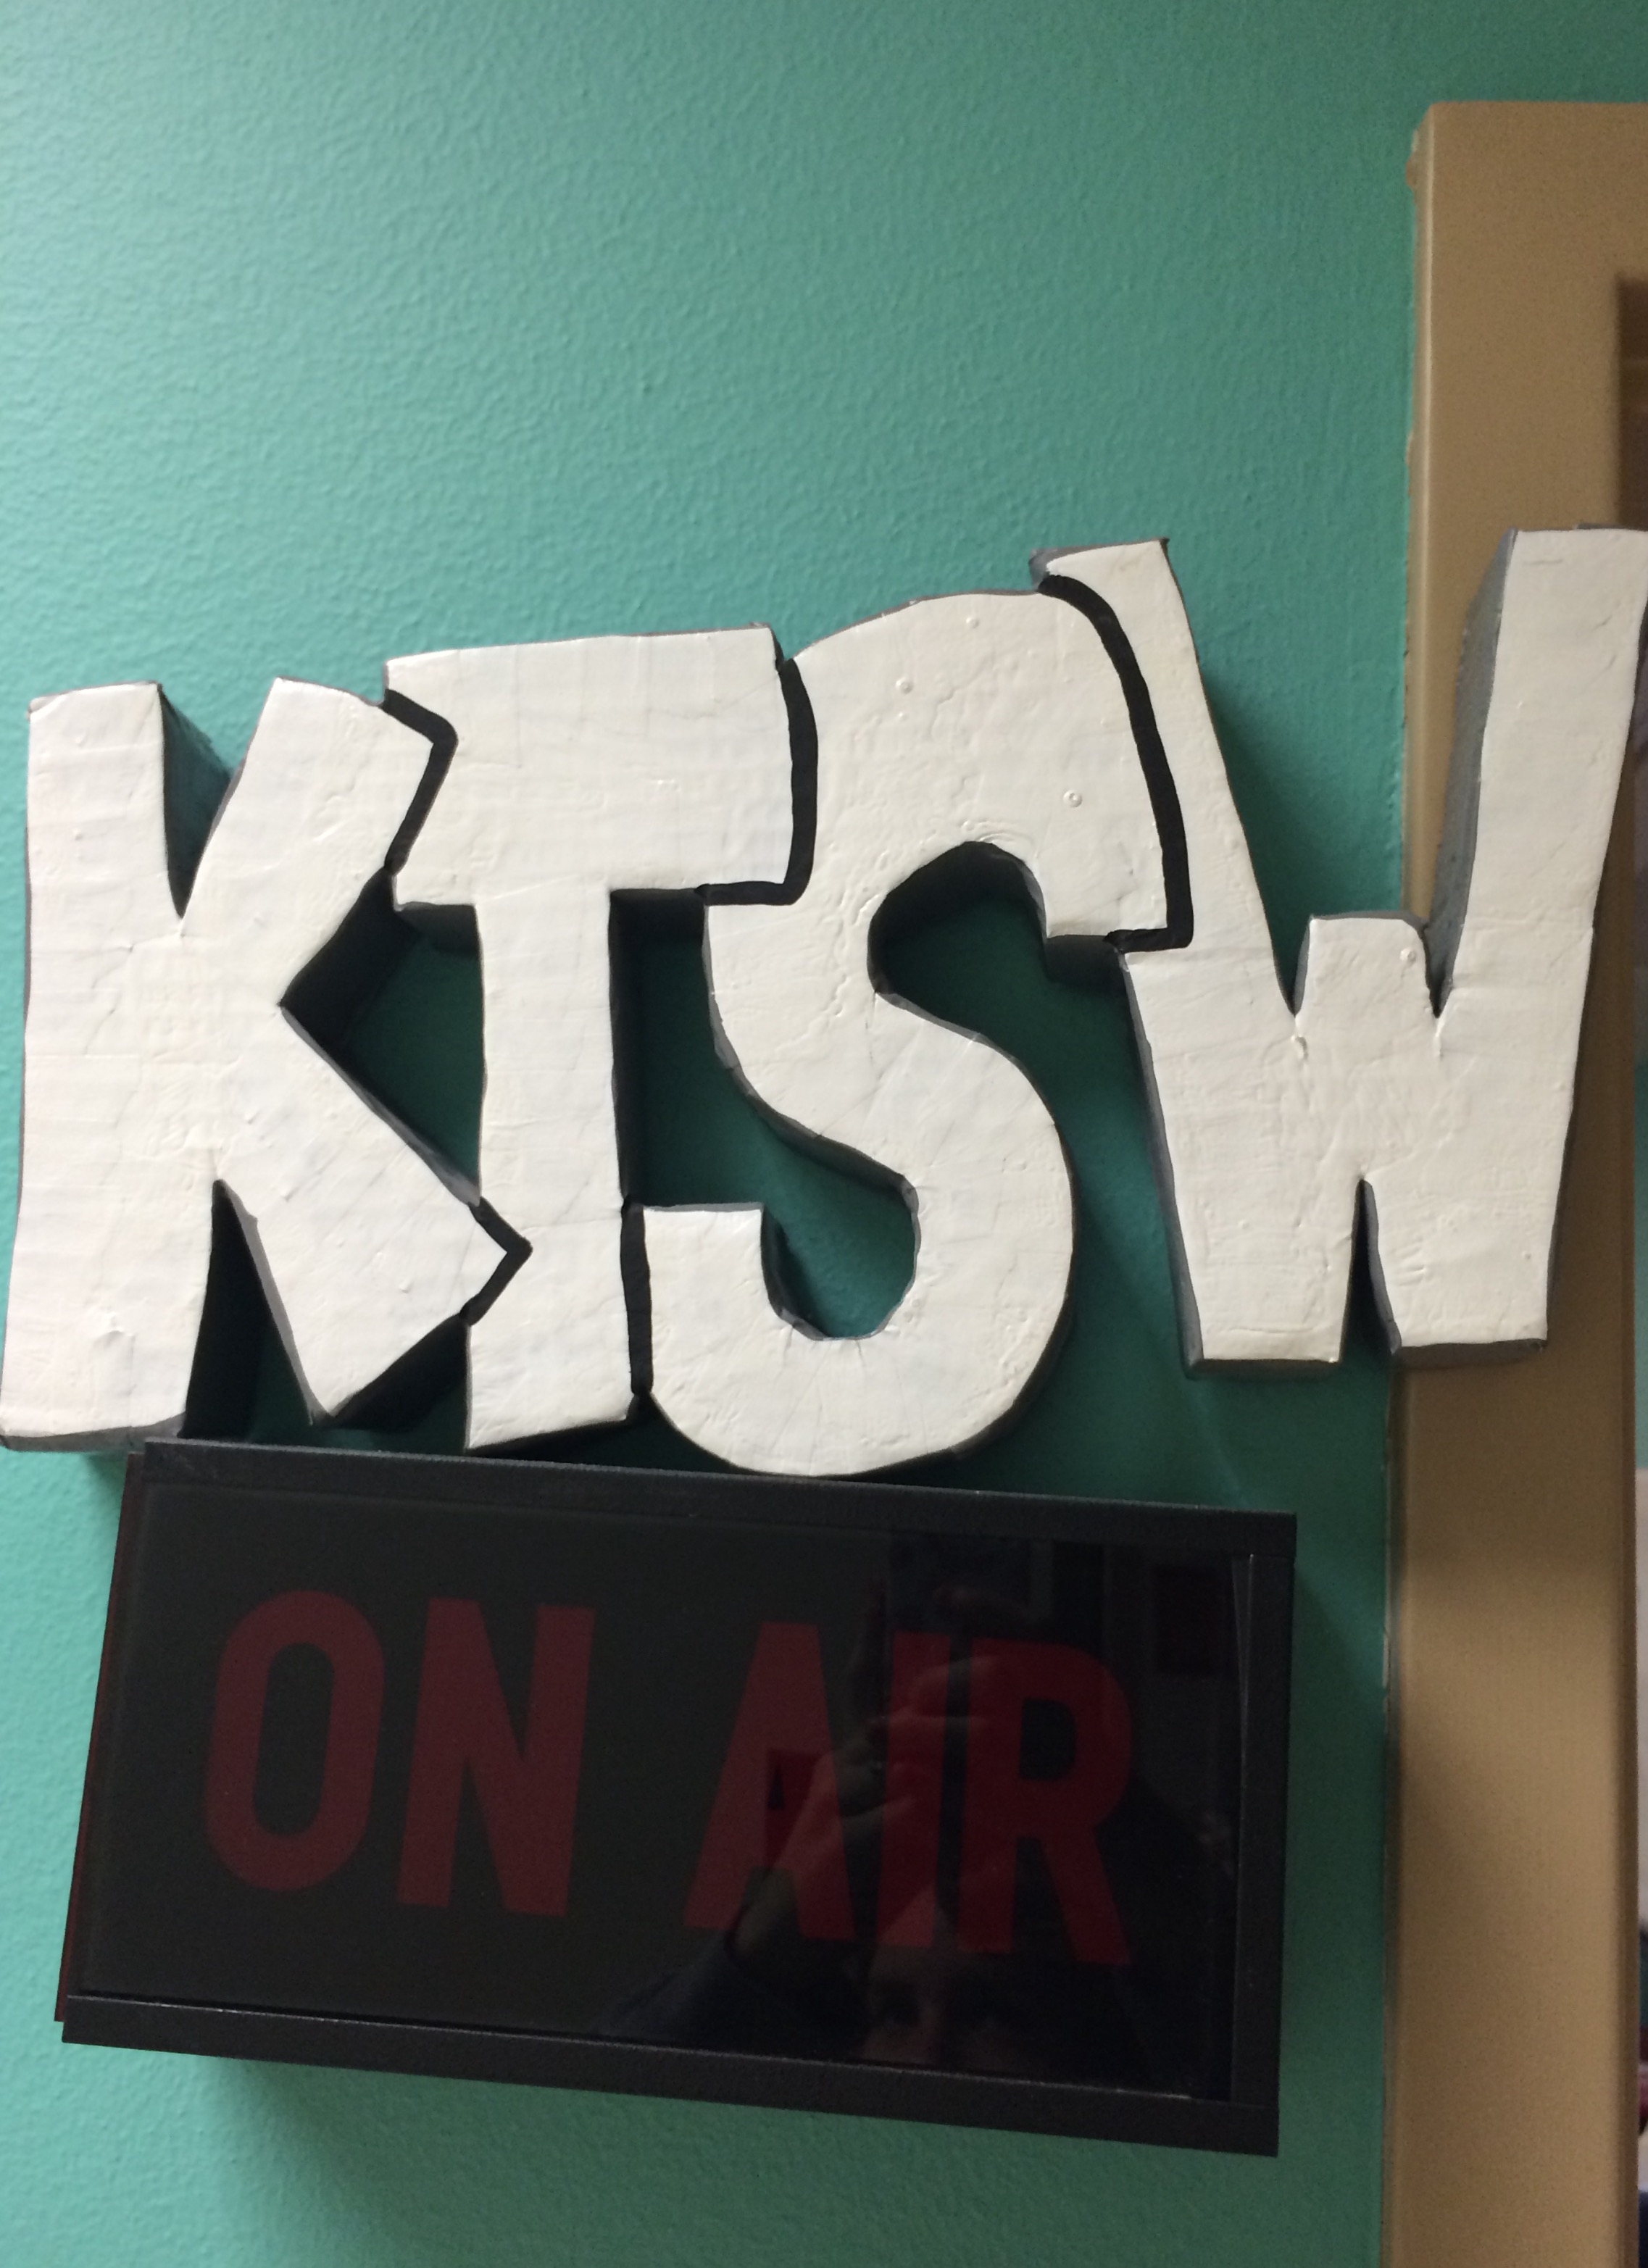 ktsw-FM 89.8